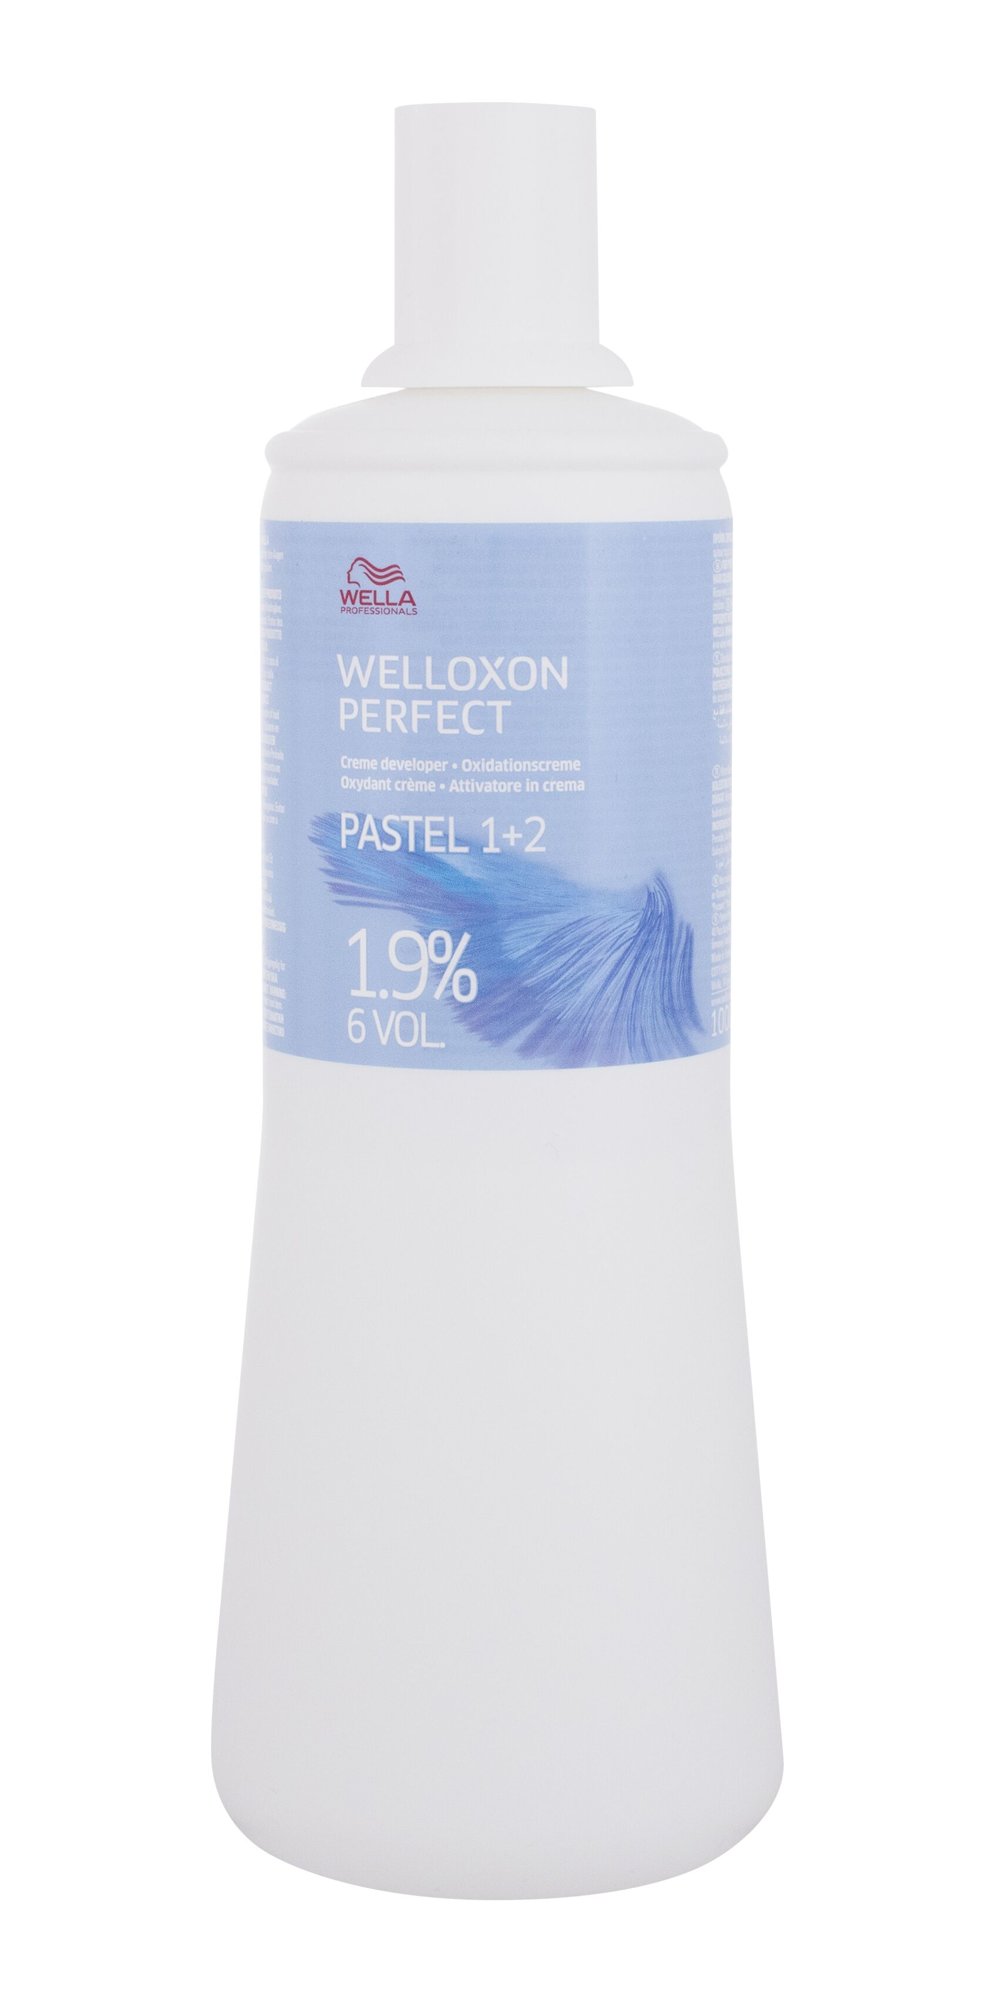 Wella Professionals Welloxon Perfect Oxidation Cream Pastel moteriška plaukų priemonė